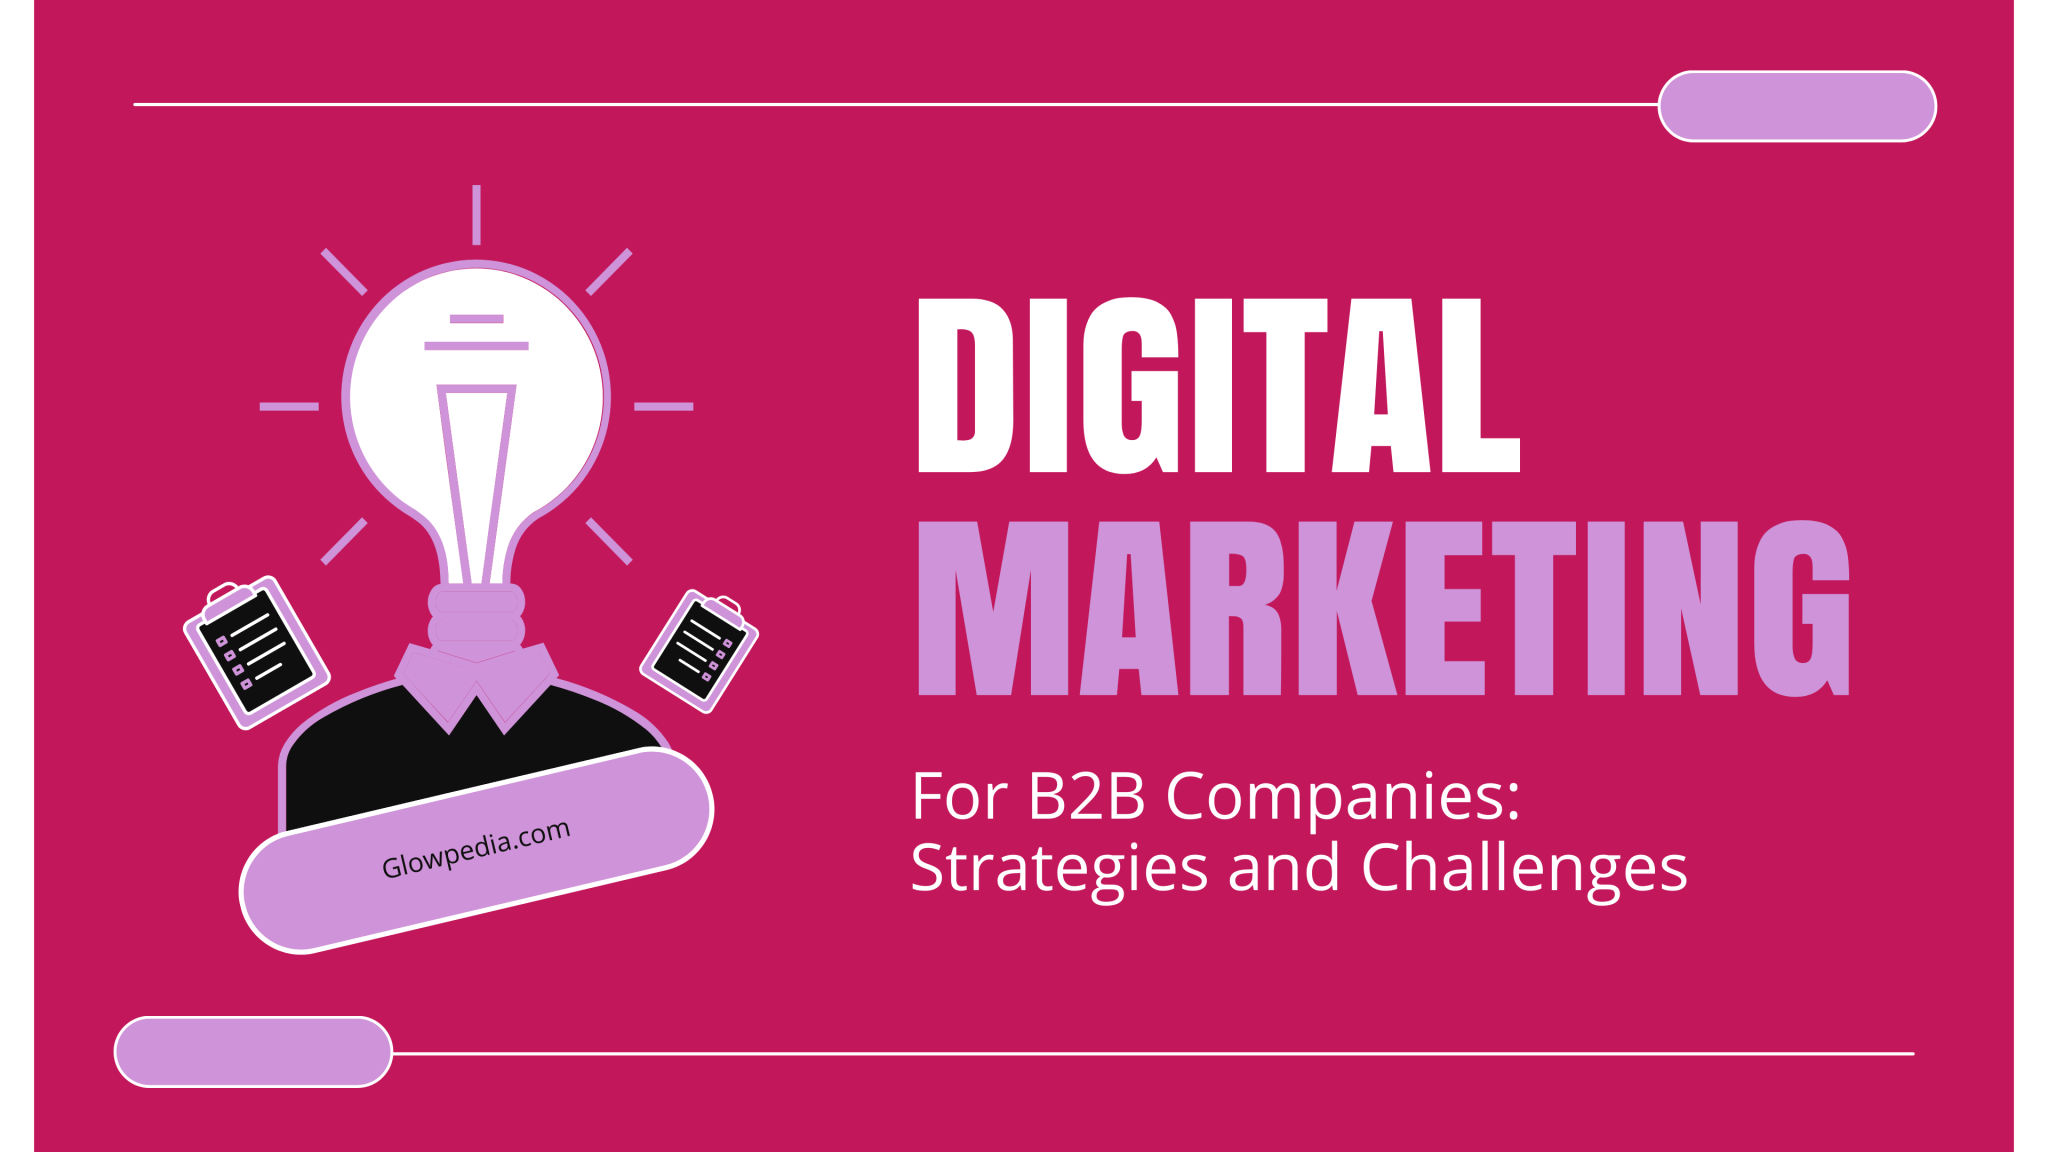 Digital Marketing for B2B Companies: Strategies and Challenges - Glowpedia